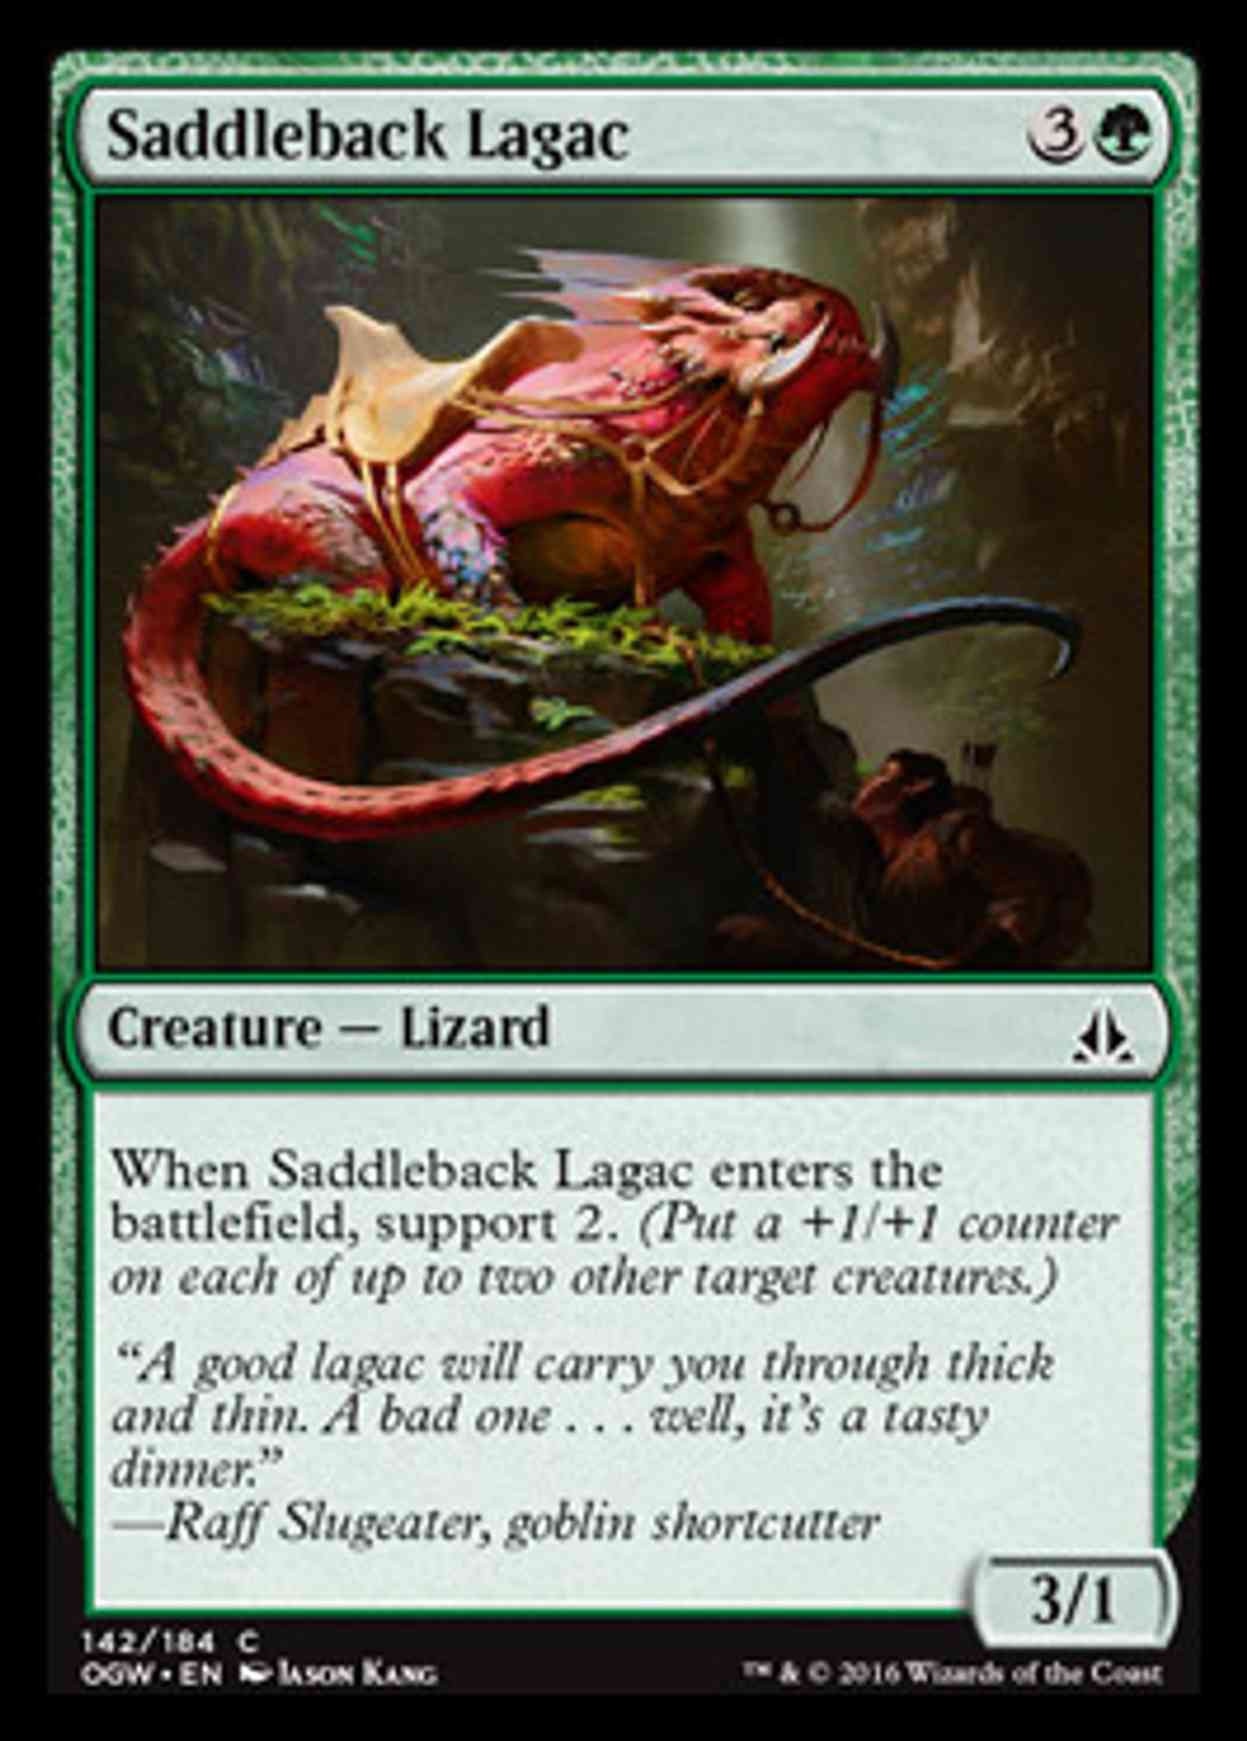 Saddleback Lagac magic card front